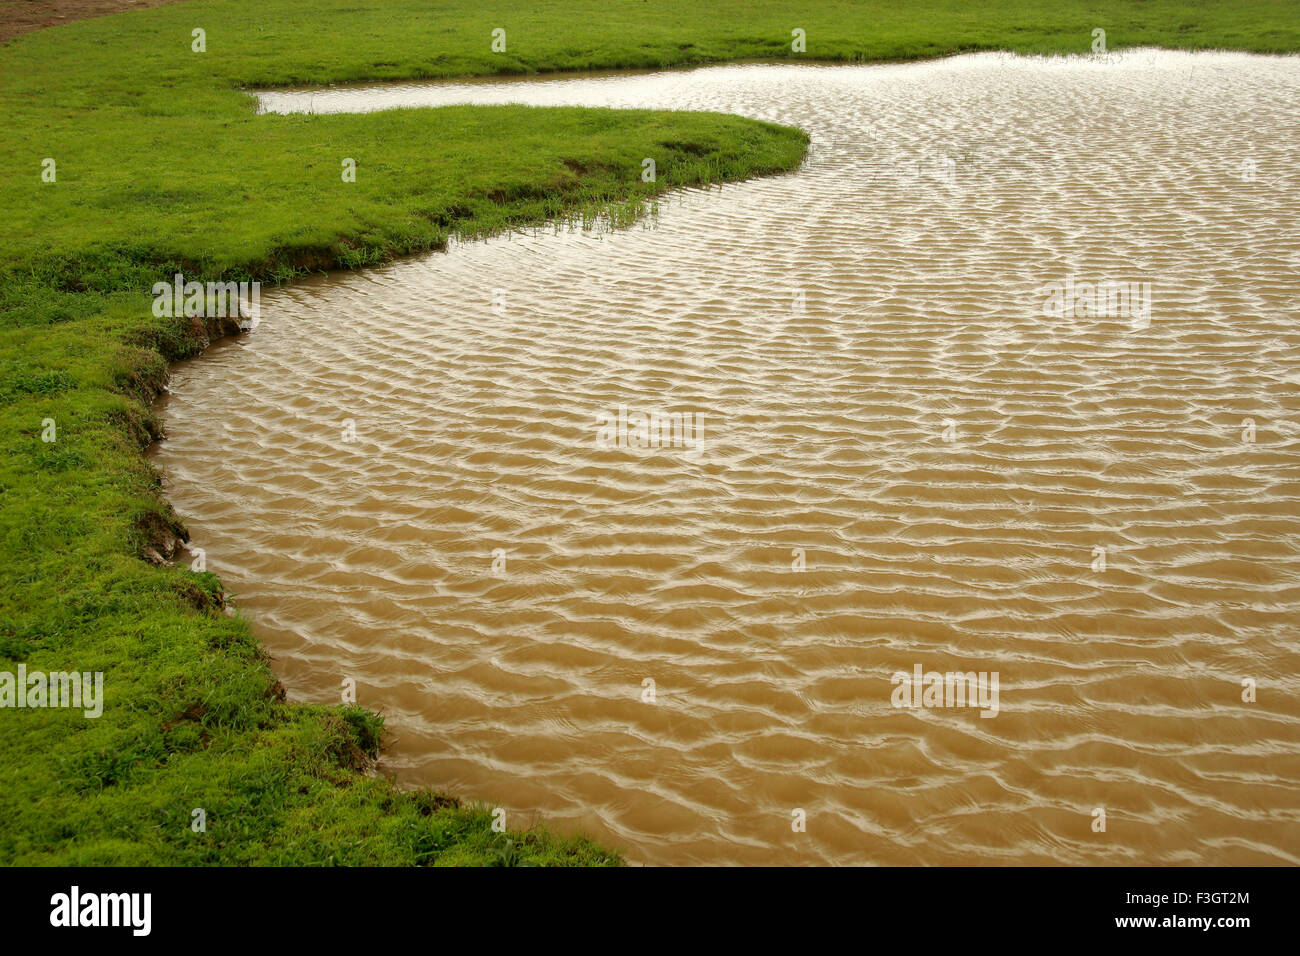 Abstract form natural pond thick ripples due wind fresh green grass around Table Land Panchgani Maharashtra Stock Photo